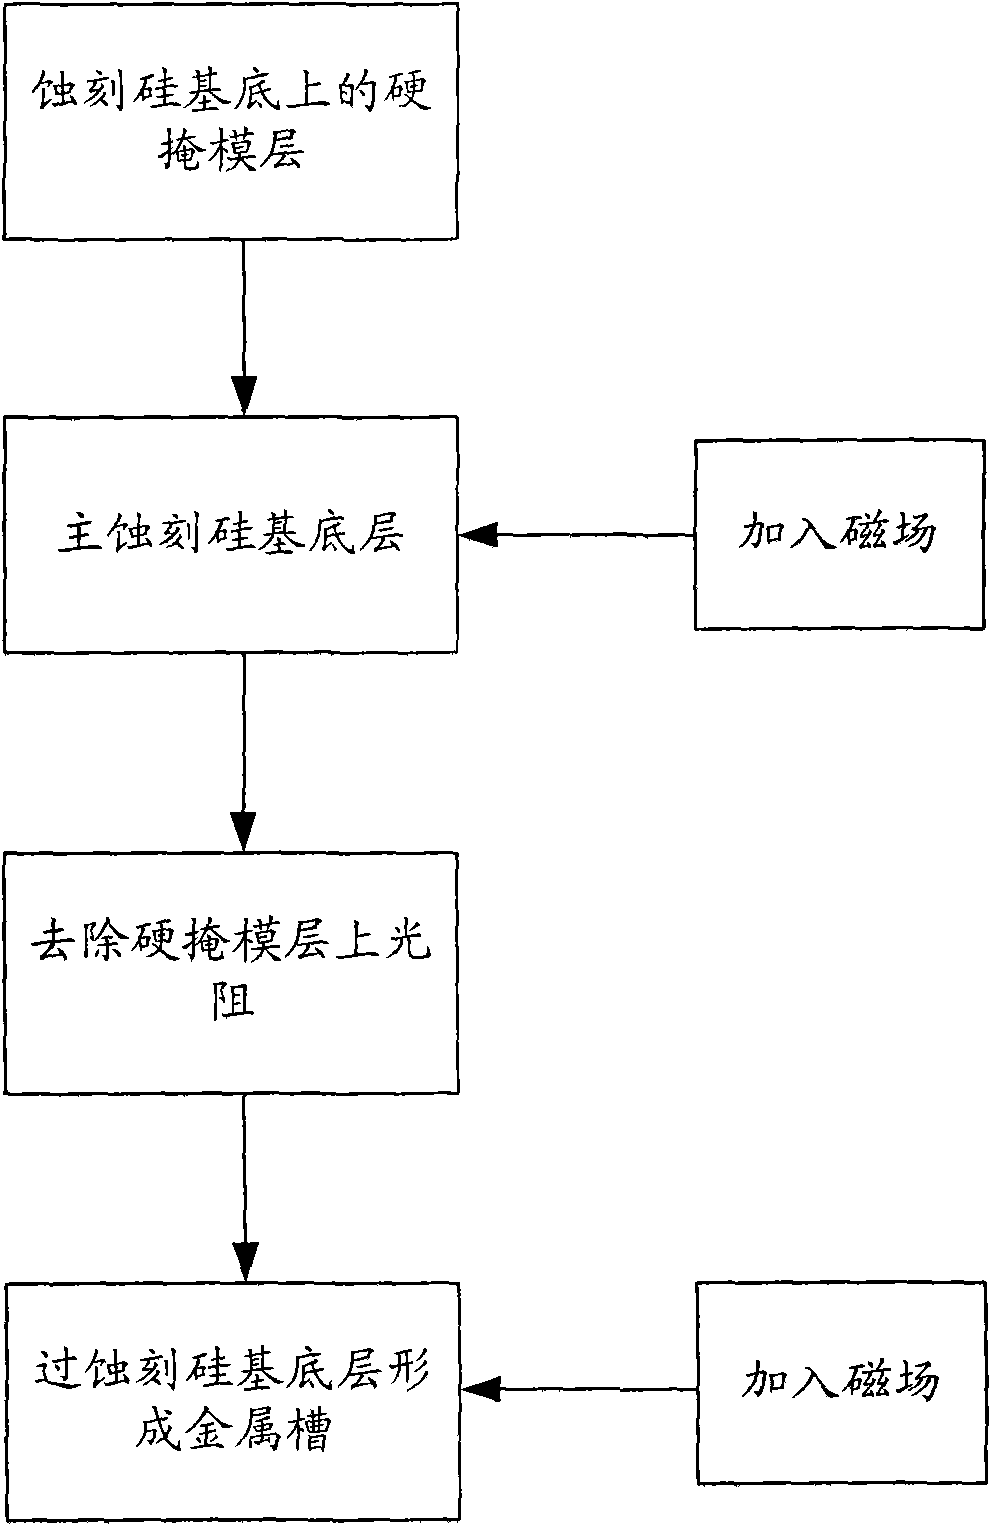 Method for producing metallic channel